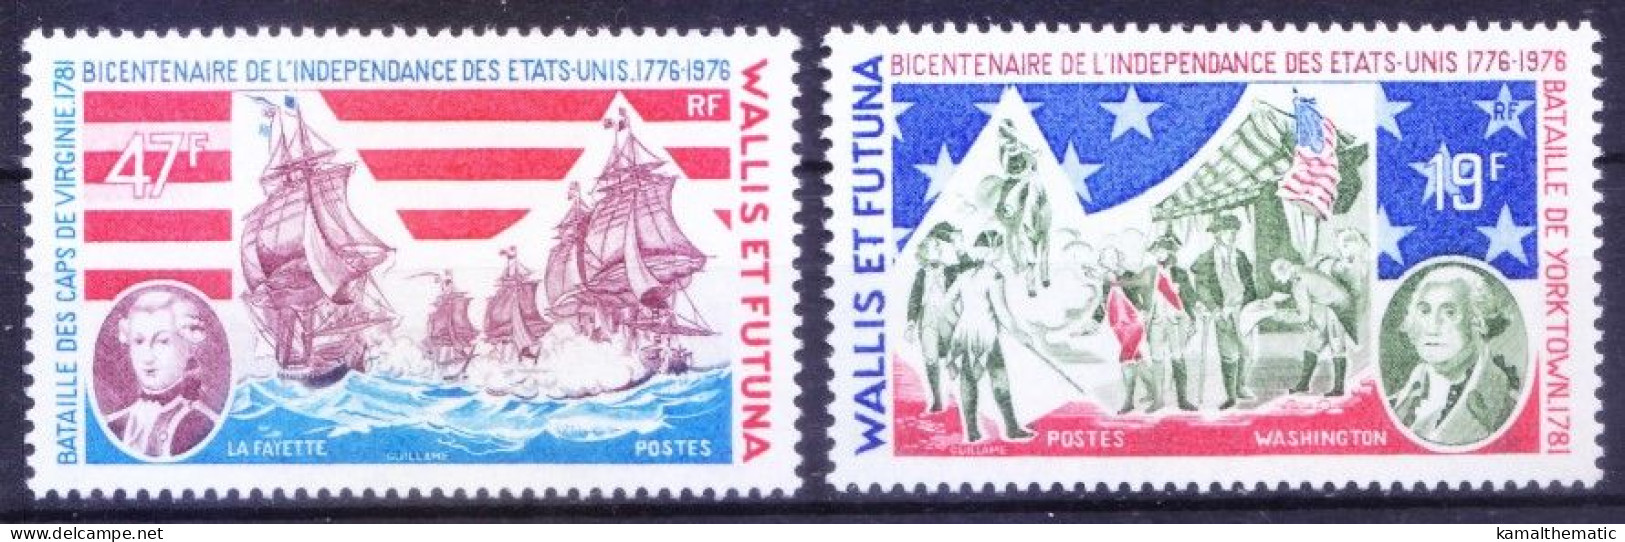 Wallis And Futuna 196 MNH 2v, Bicentenary Of Independence Of United States - Indipendenza Stati Uniti